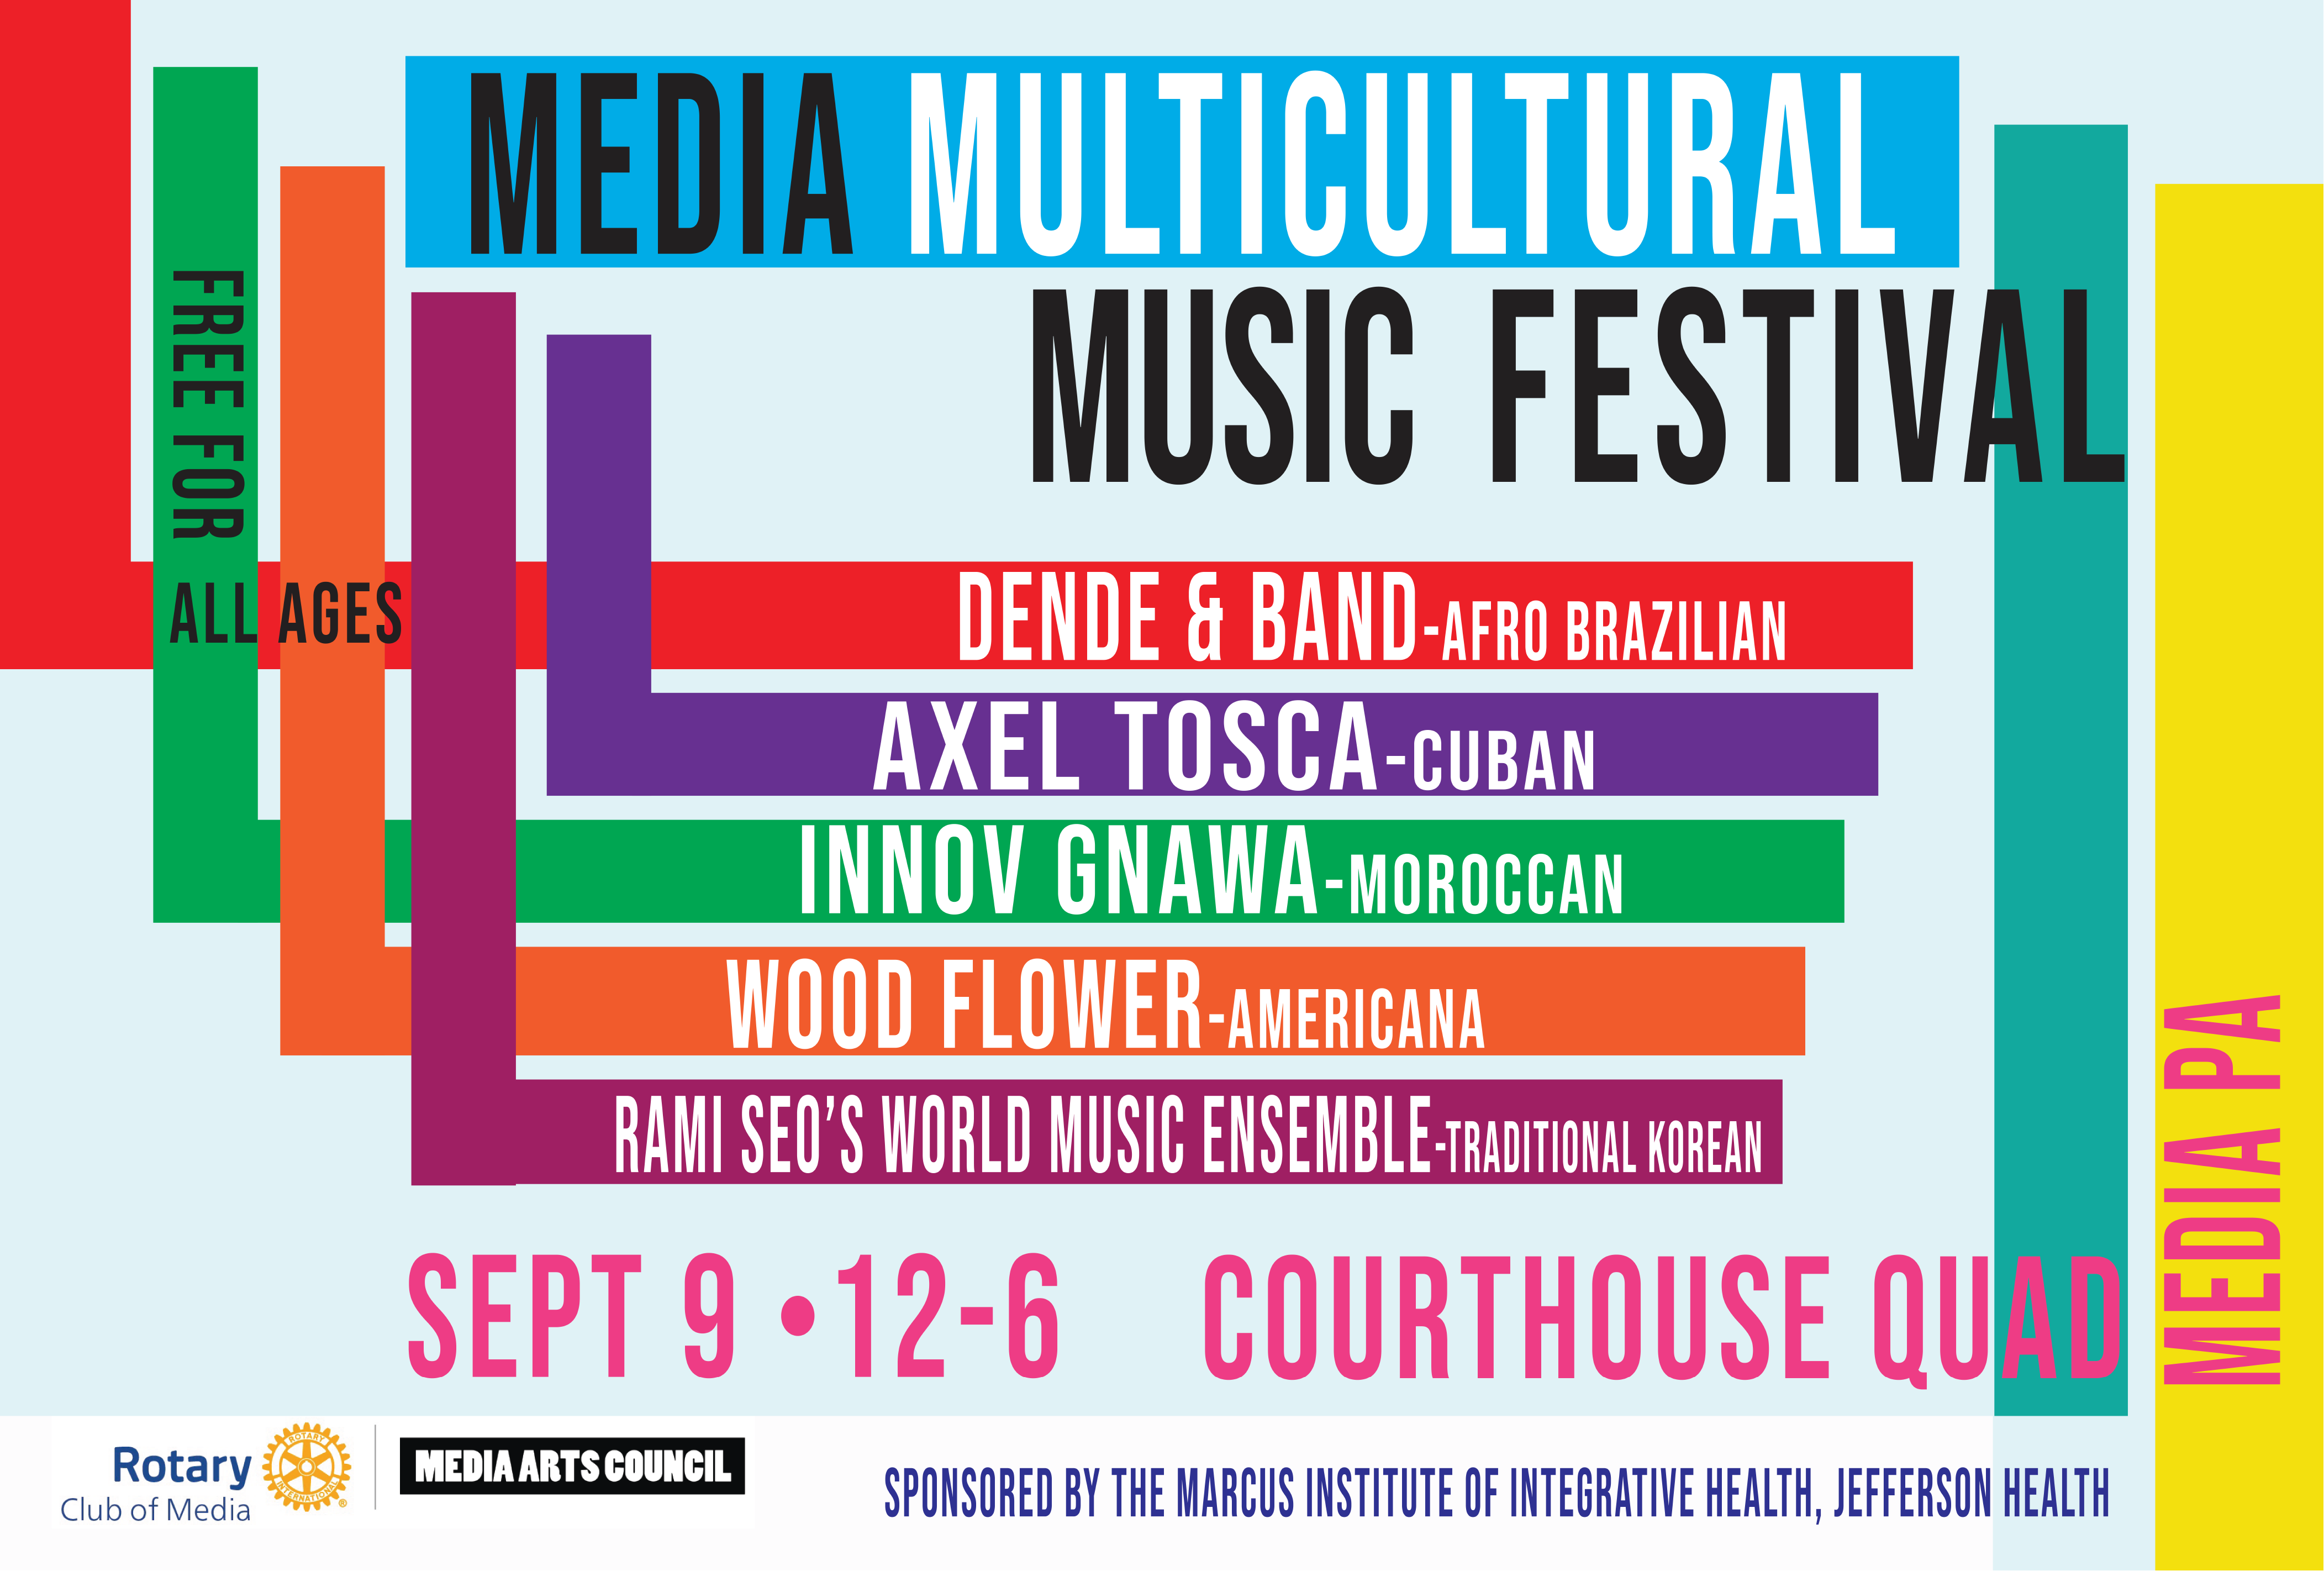 Media Multicultural Music Festival